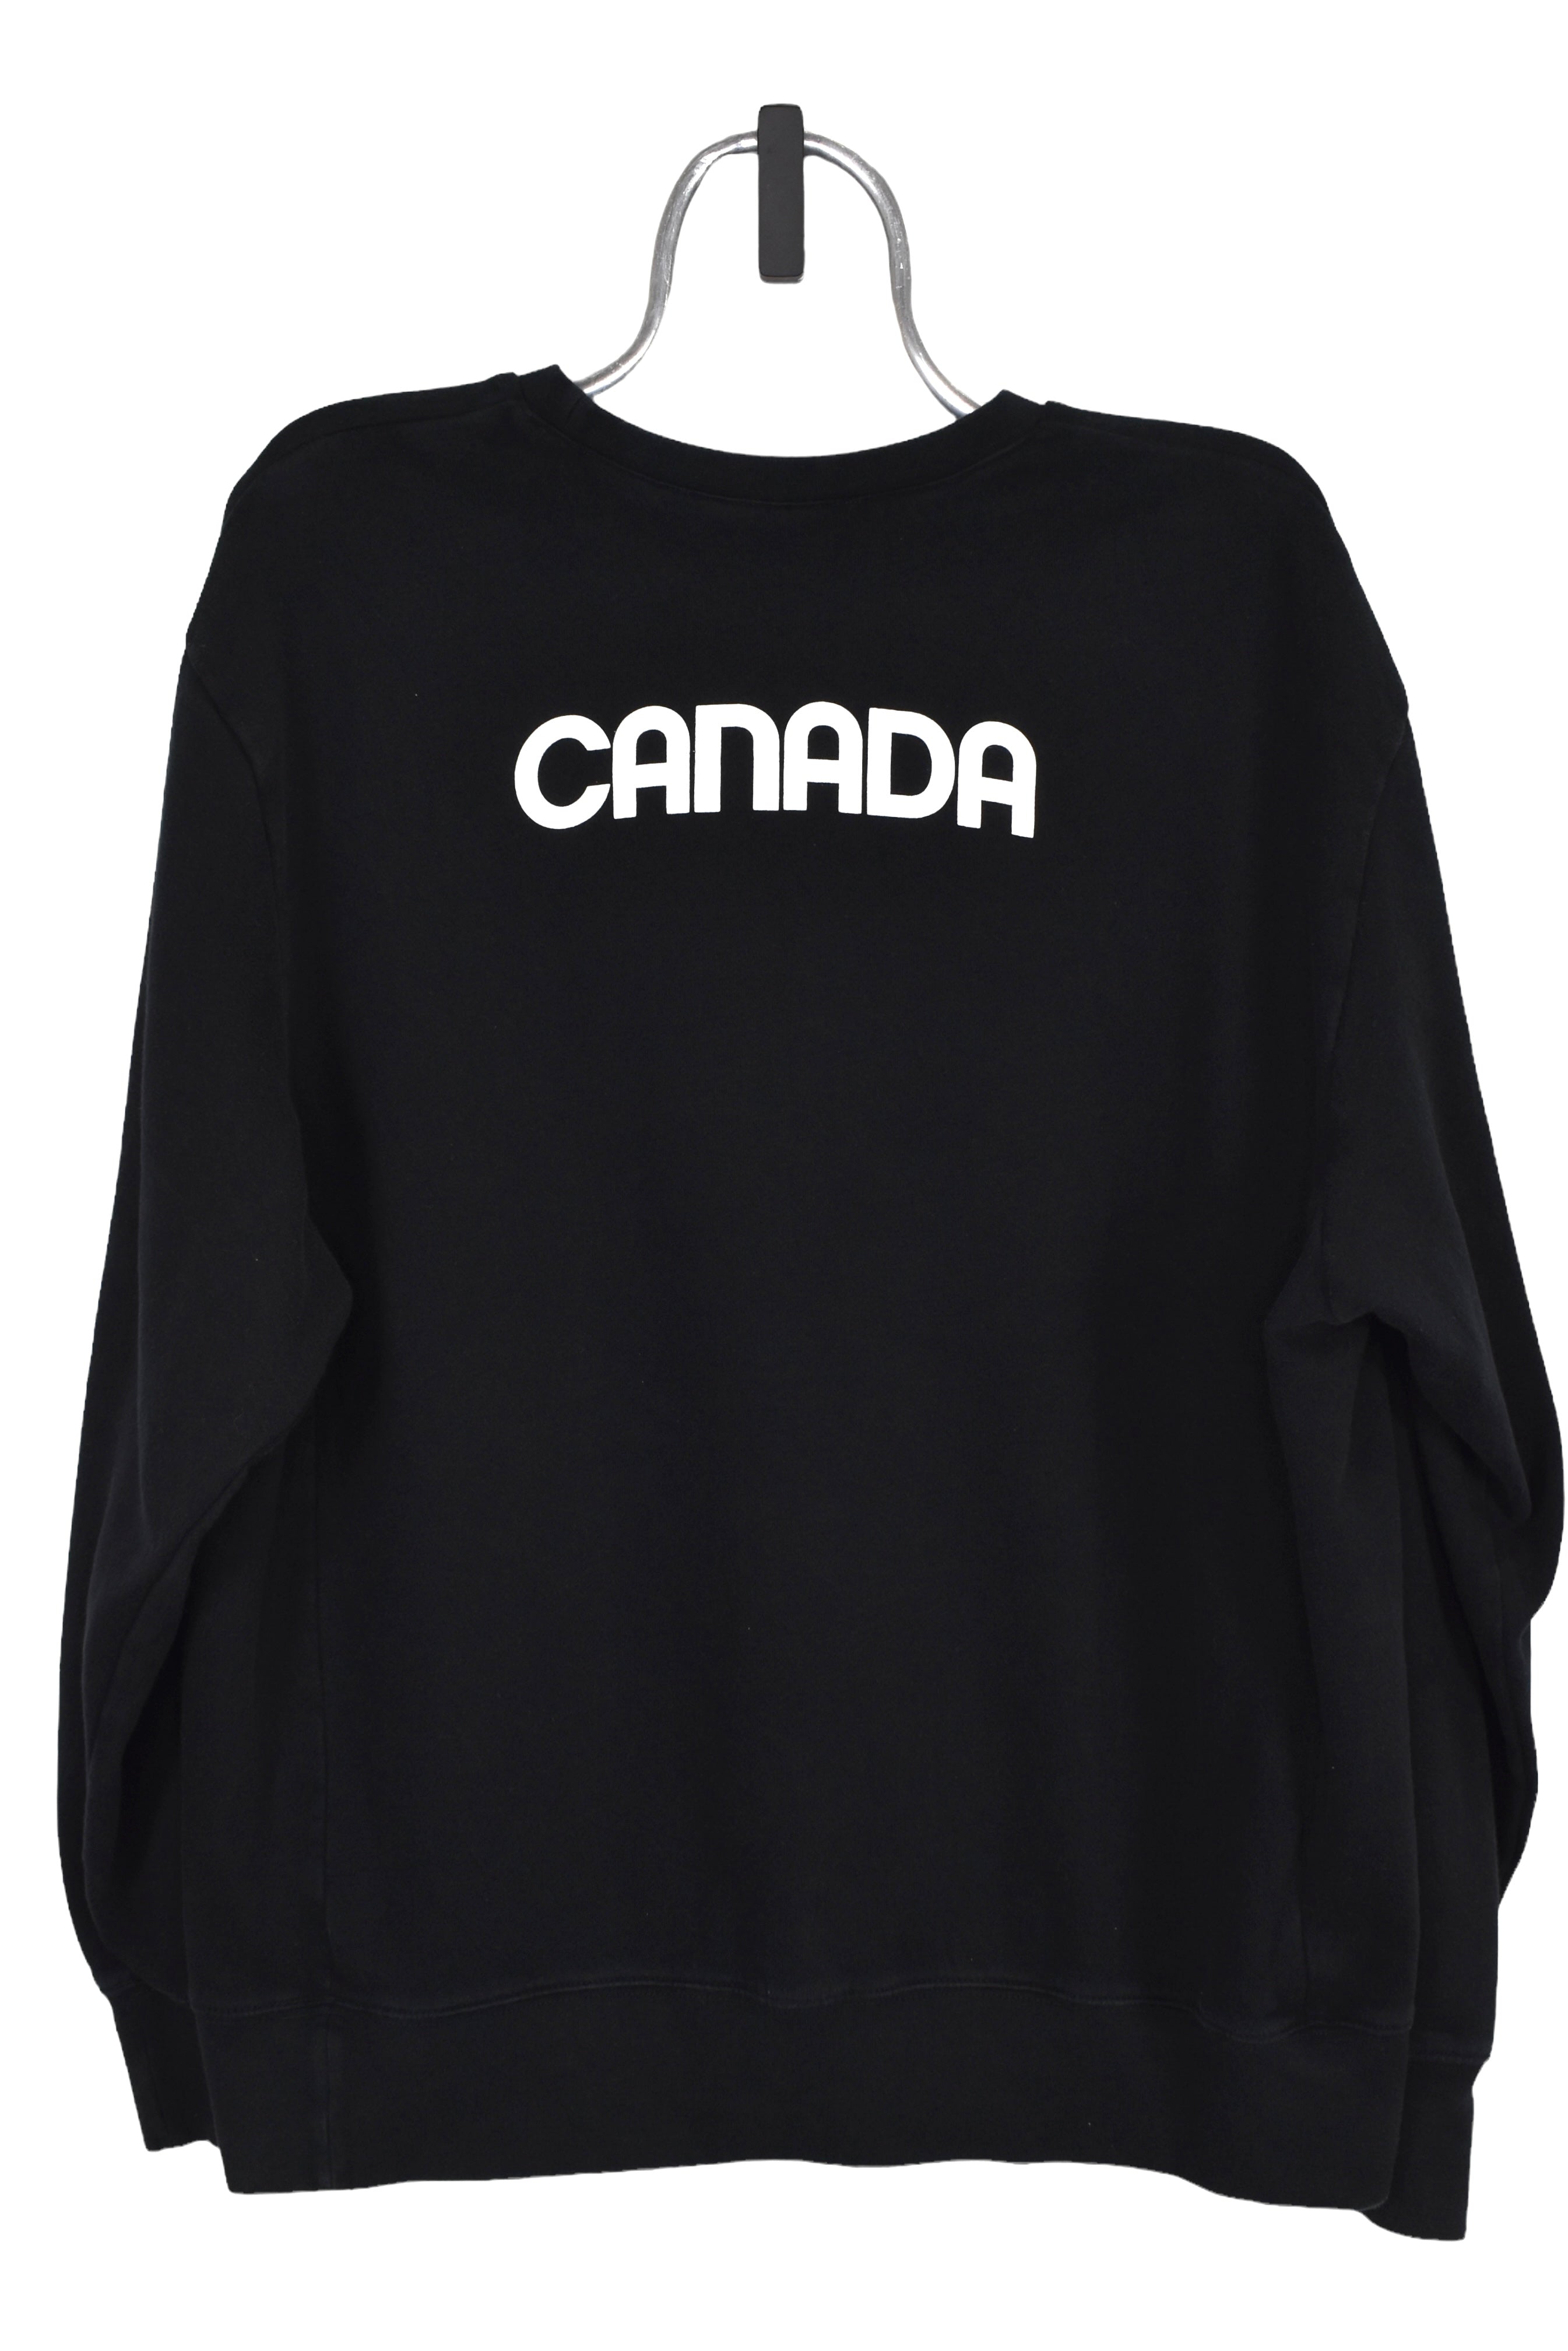 Vintage Nike sweatshirt (XL), black Canada embroidered crewneck